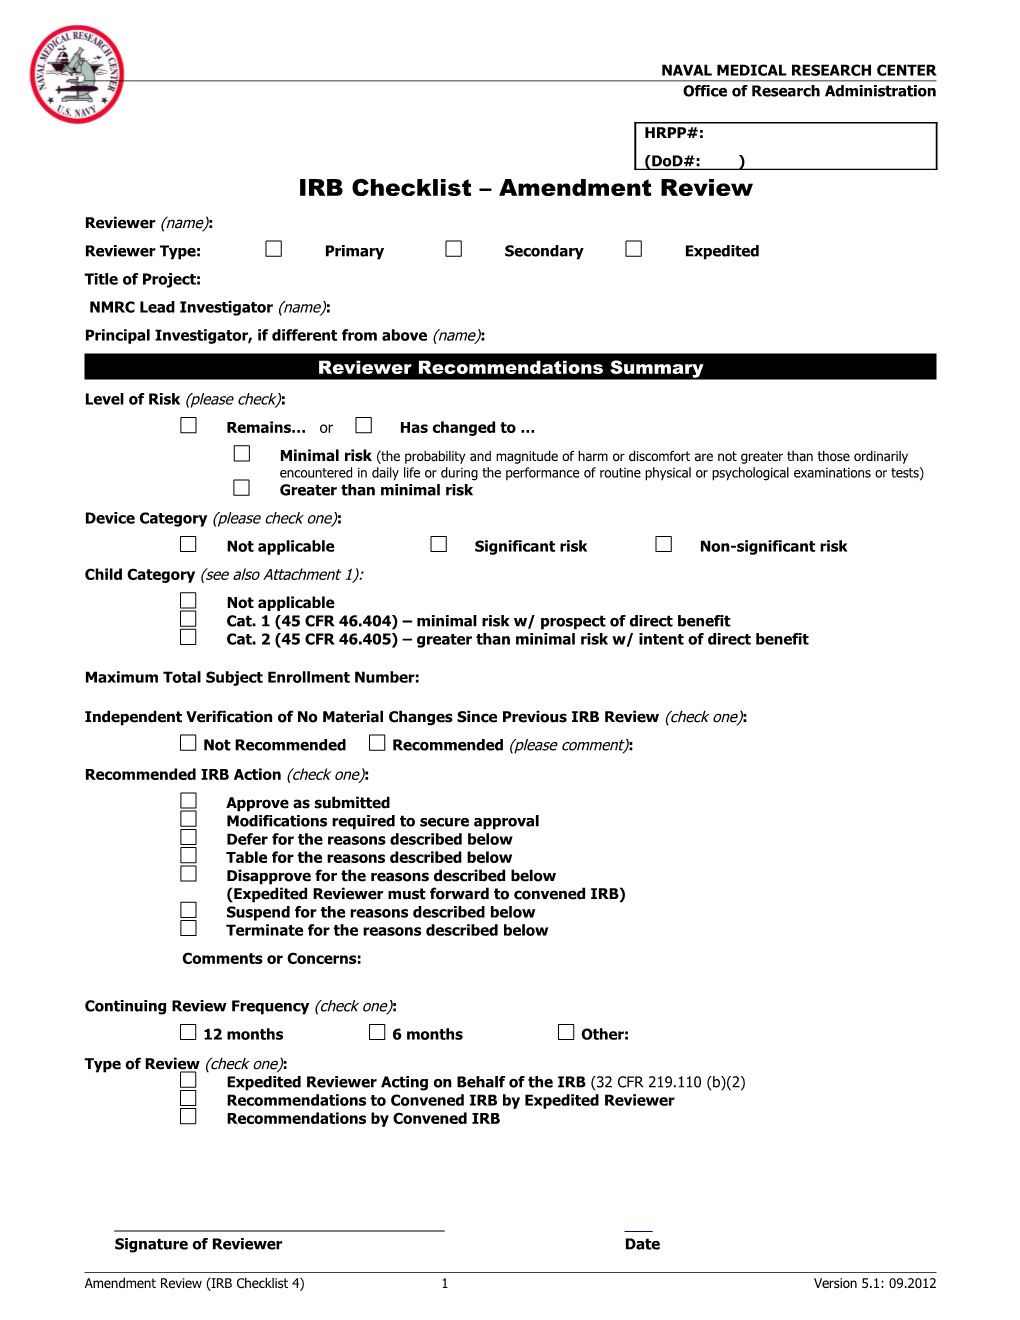 IRB Checklist Amendment Review